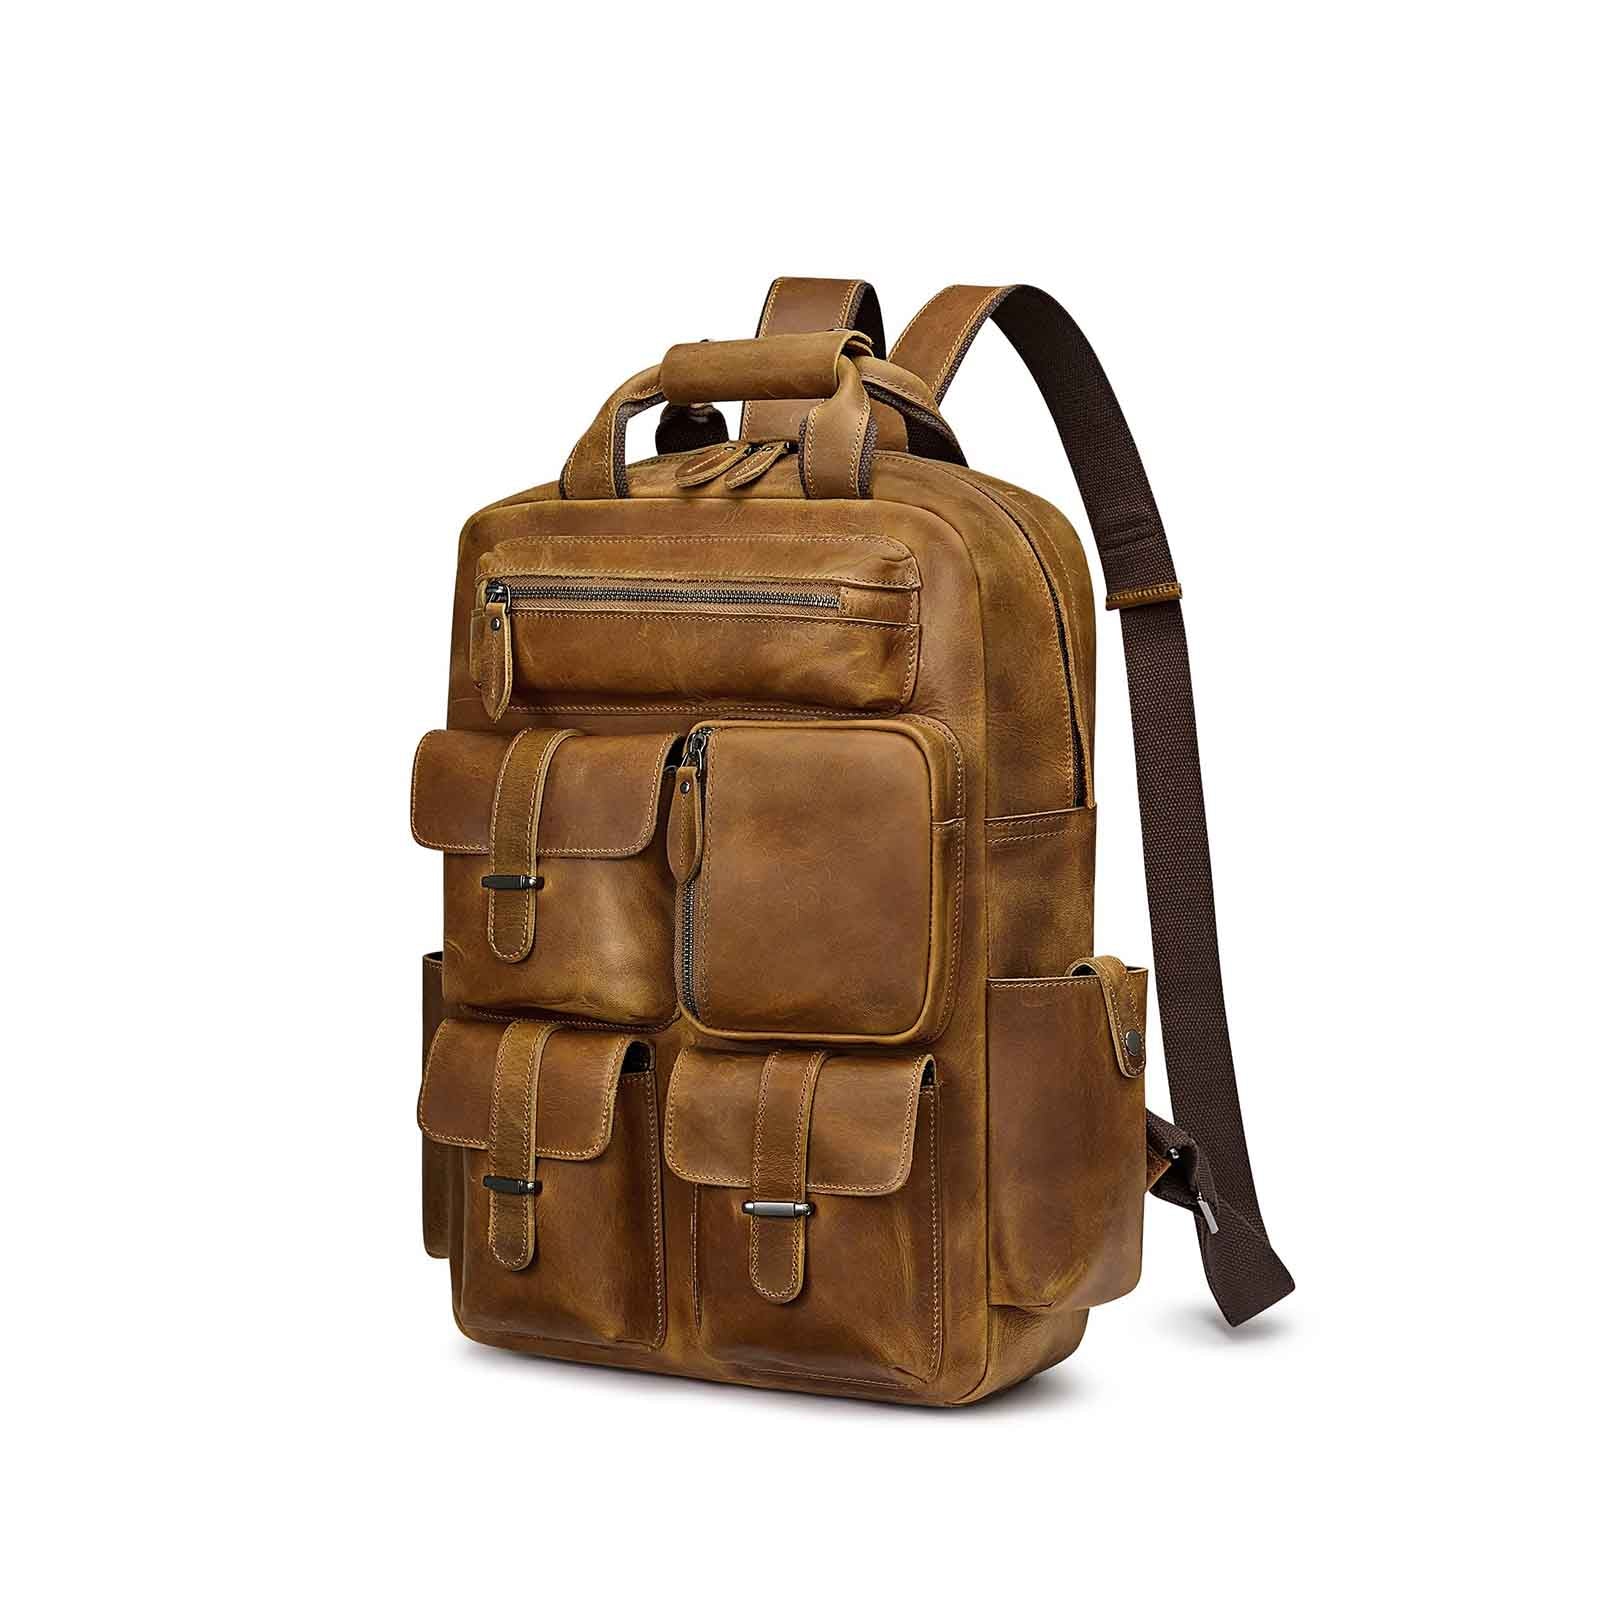 leather backpack for men